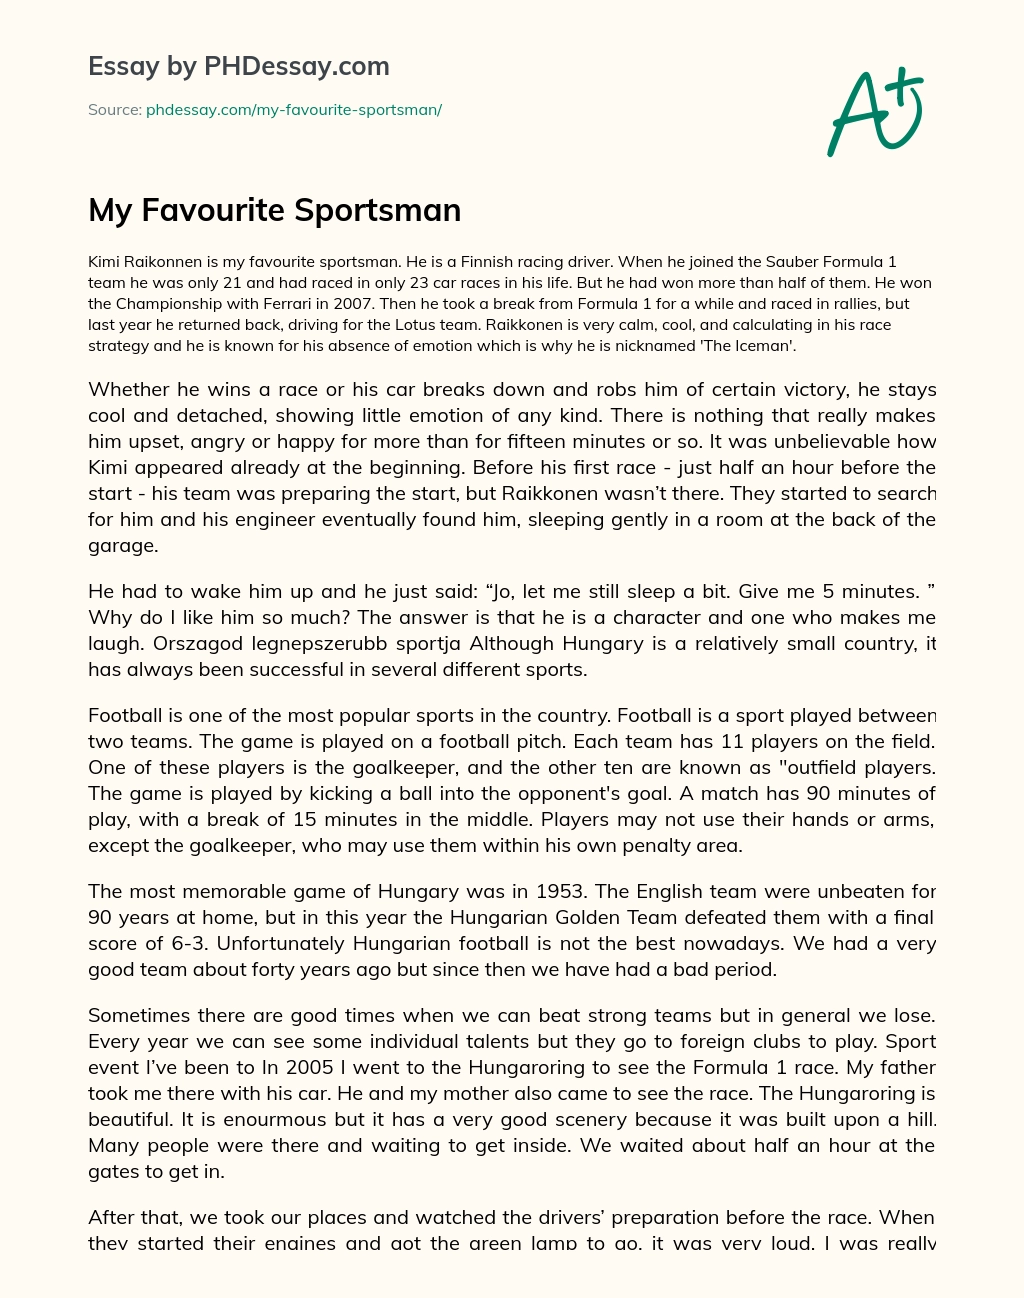 My Favourite Sportsman essay